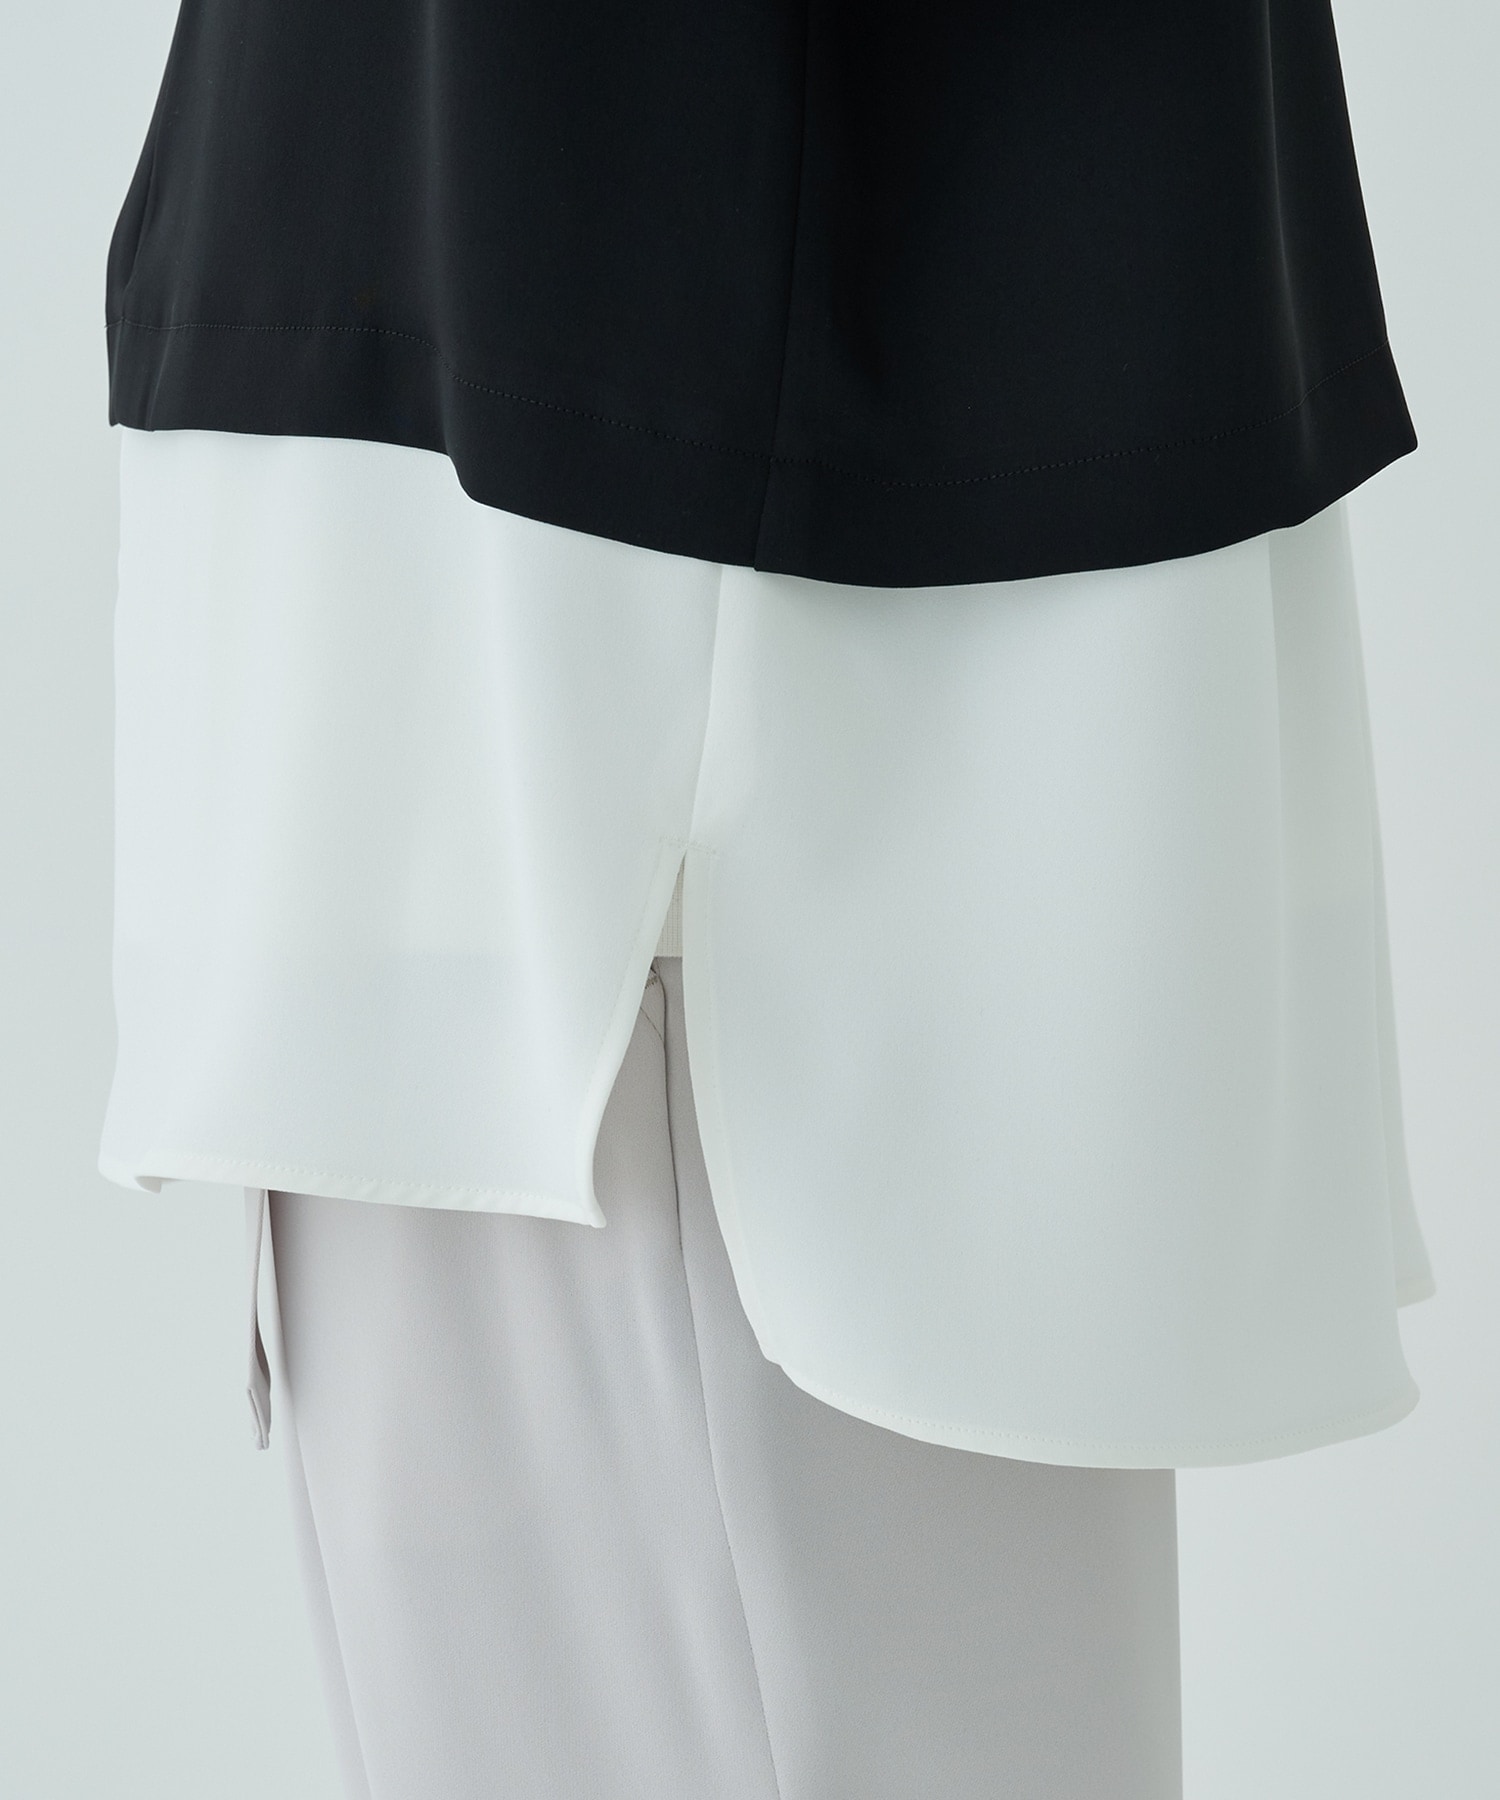 Double Cloth AsymmetricalStripe Short Sleeve Shirt CULLNI